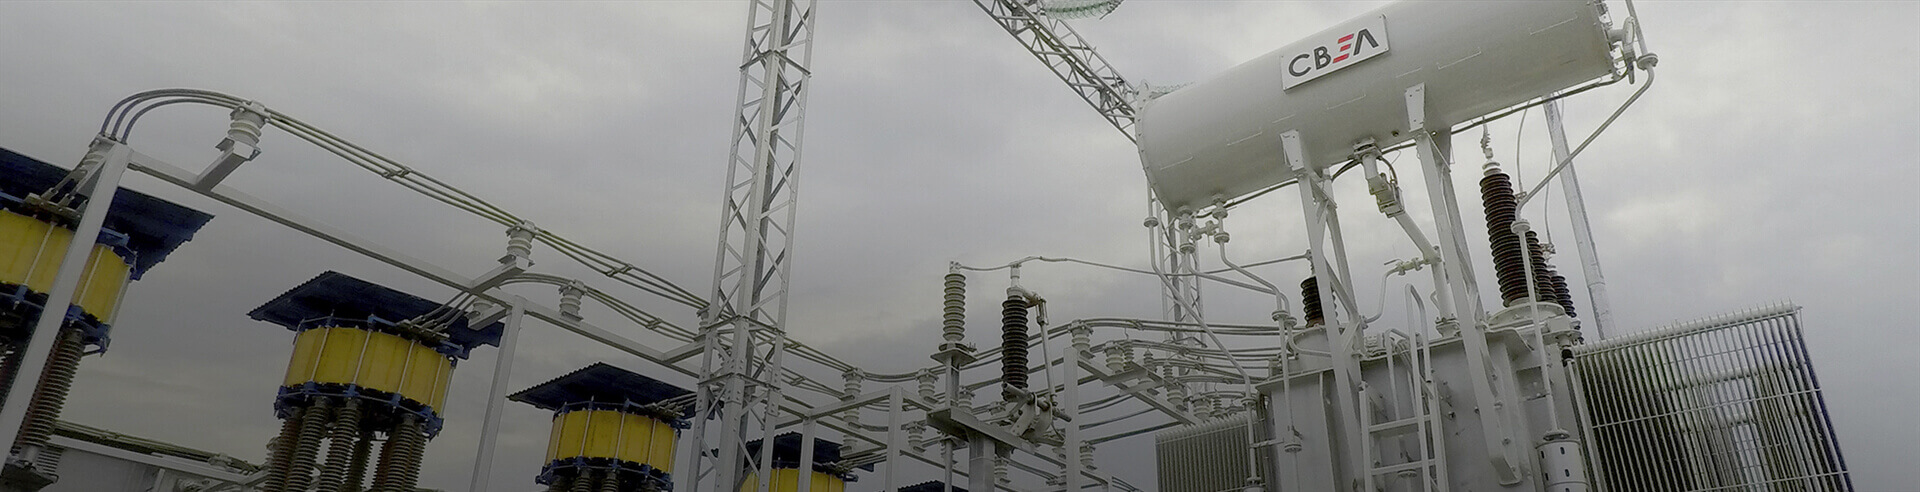 Greenhouse 110/10 kV substation